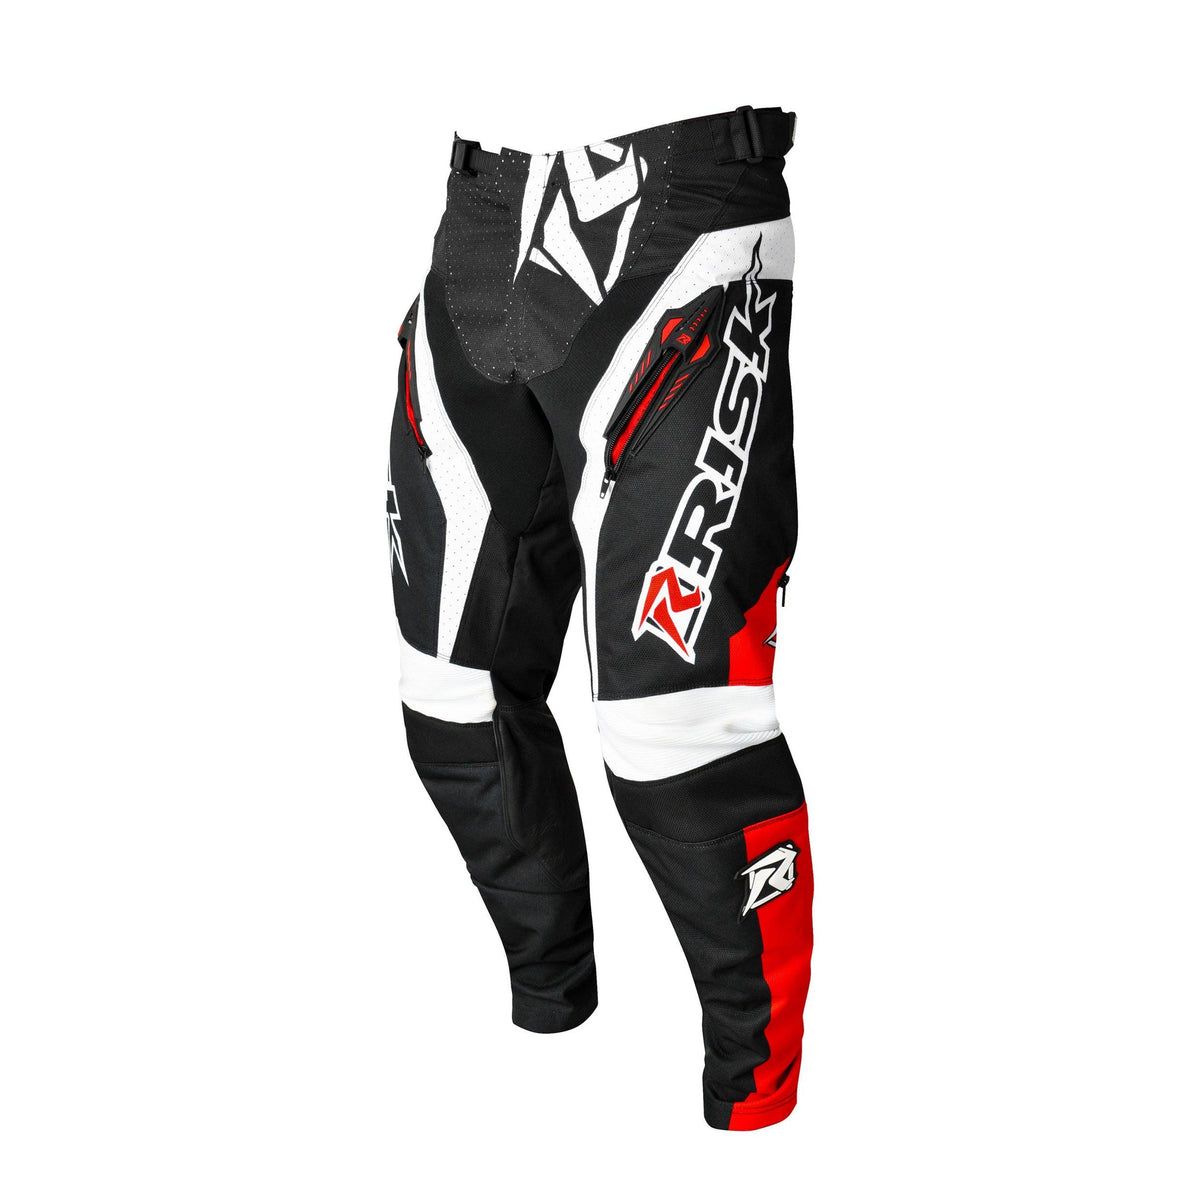 Dirt Bike & Motocross Pants in Dirt Bike Gear 